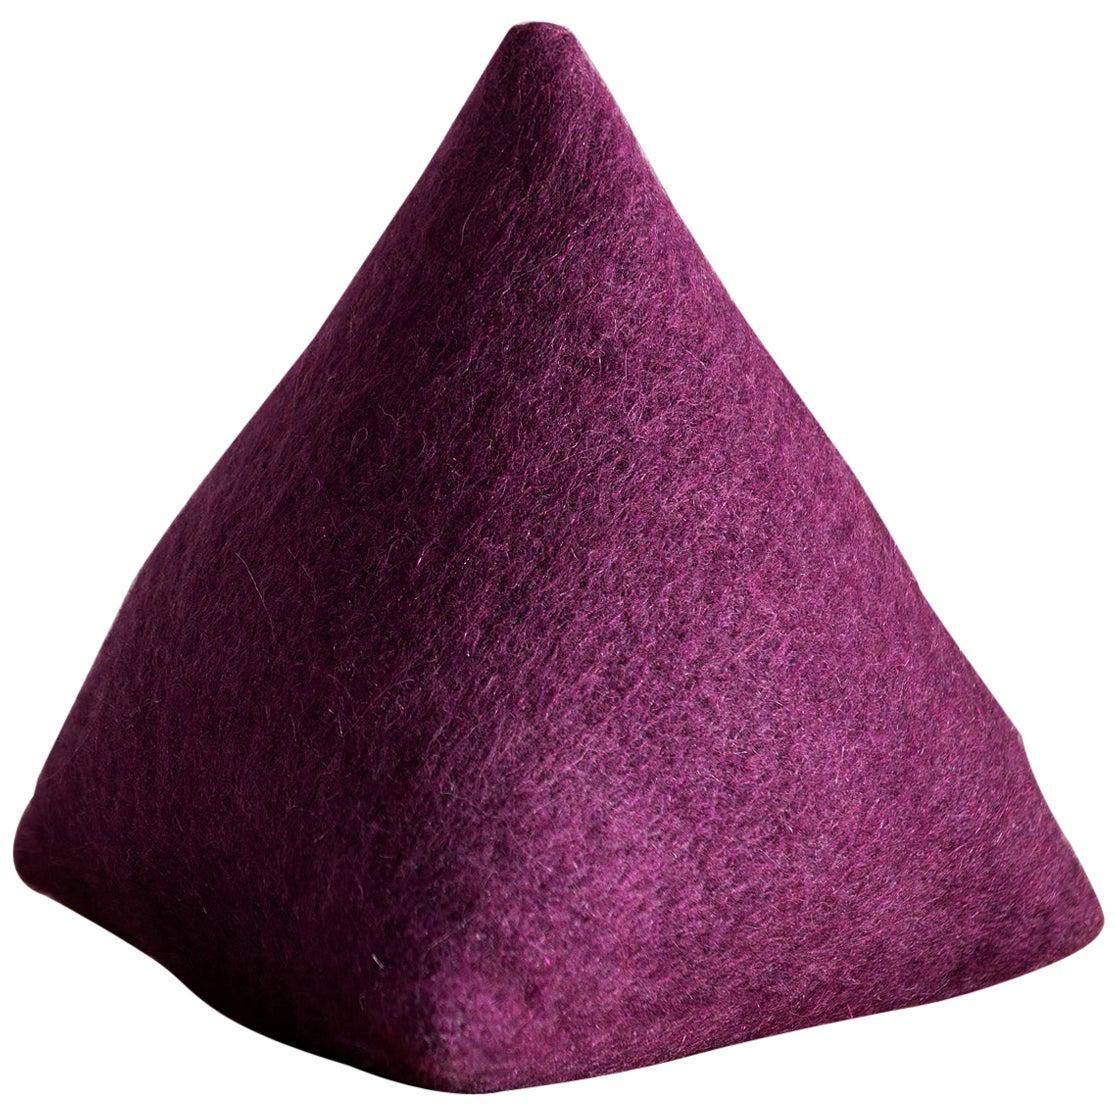 Hunt Modern Pyramid Pillow in Pierre Frey Yeti Zinzolin For Sale